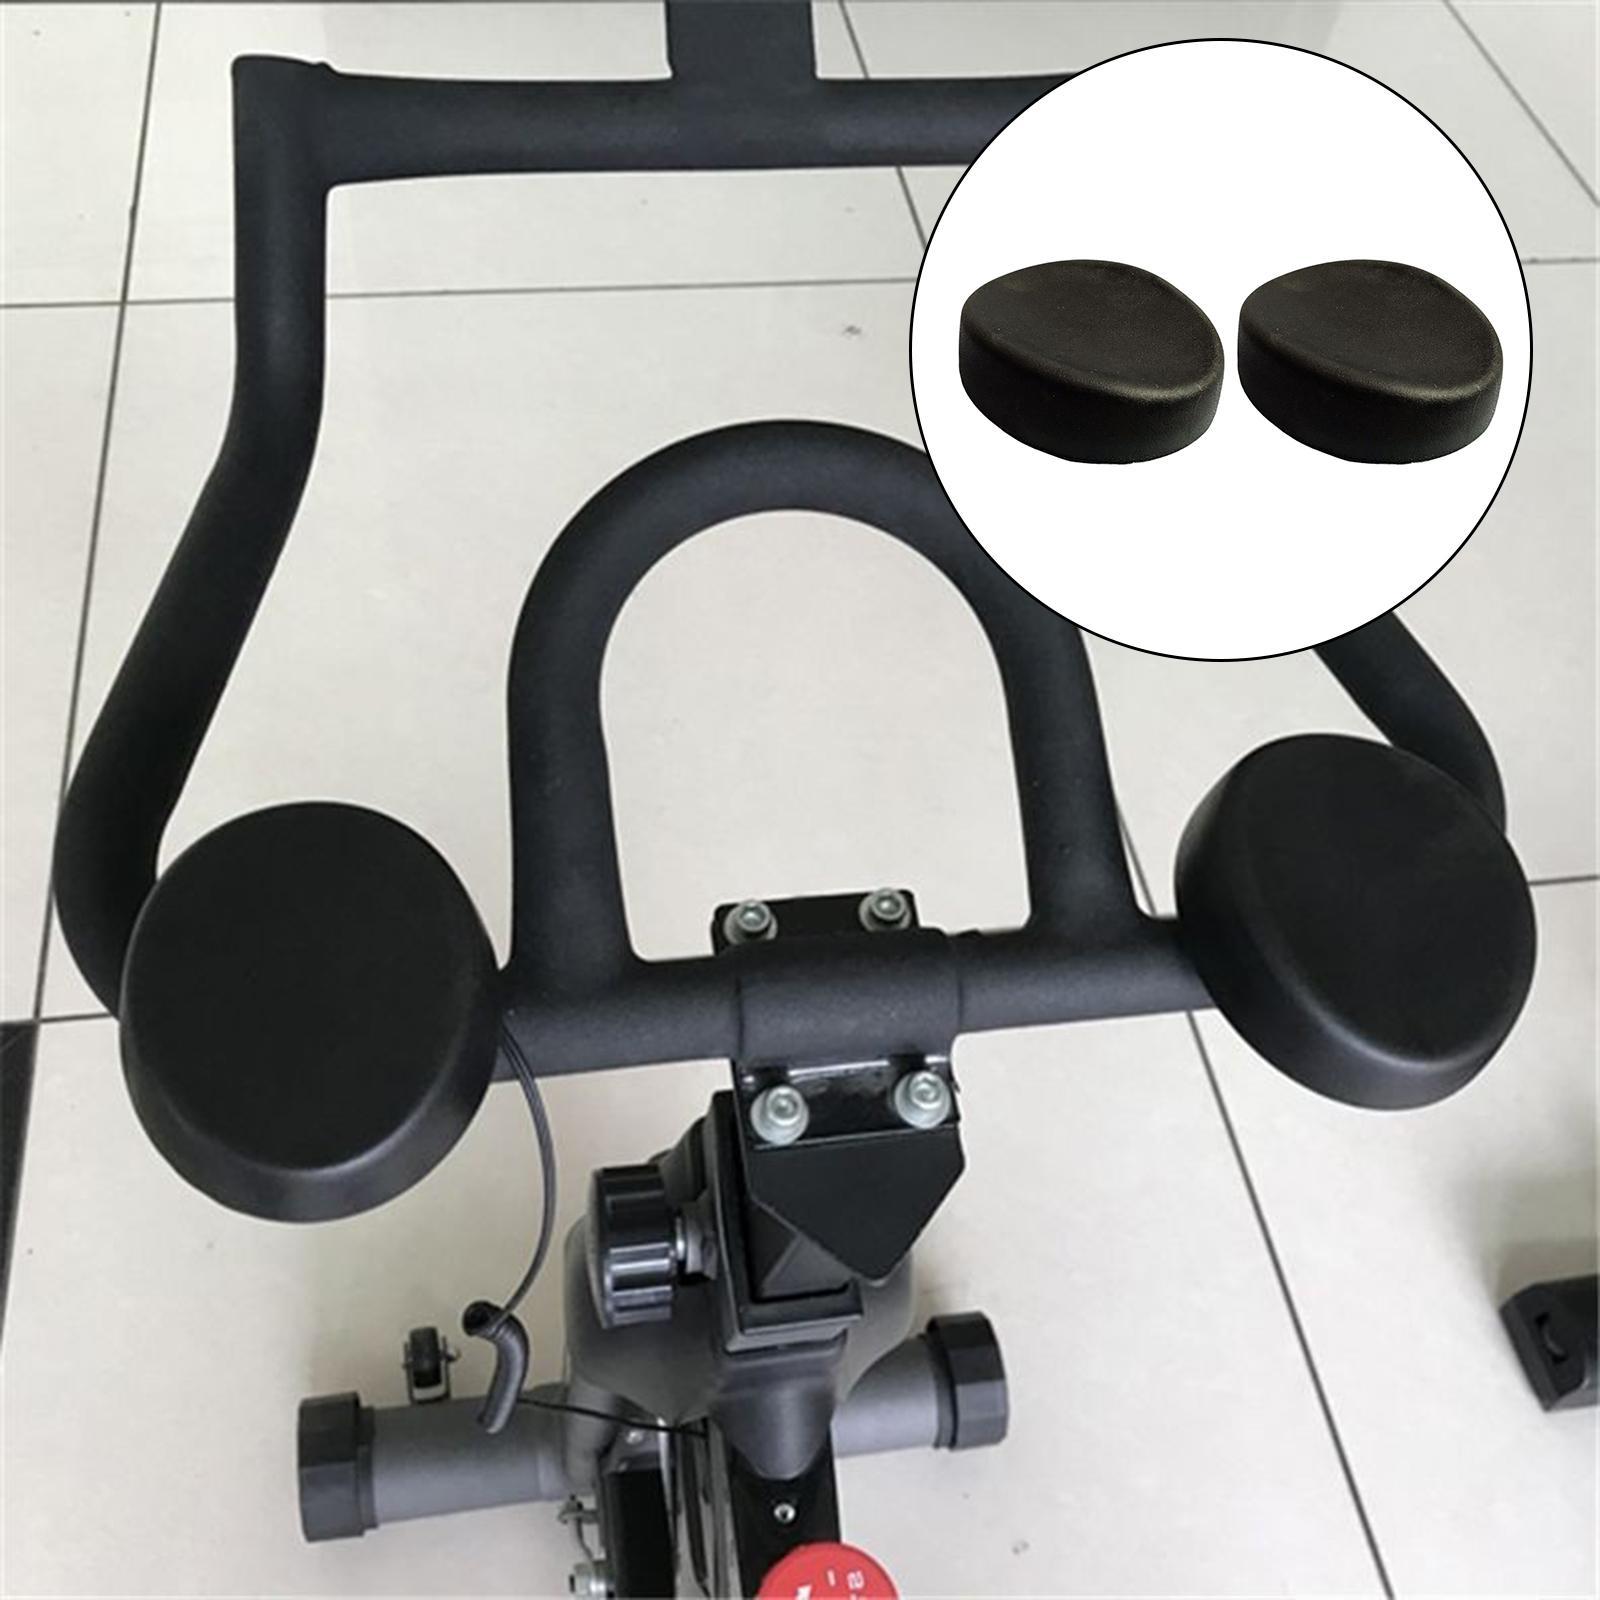 Bike Foam Mat Wear Resistance Sweatproof Cushion for Riding Workout Outdoor Accessories